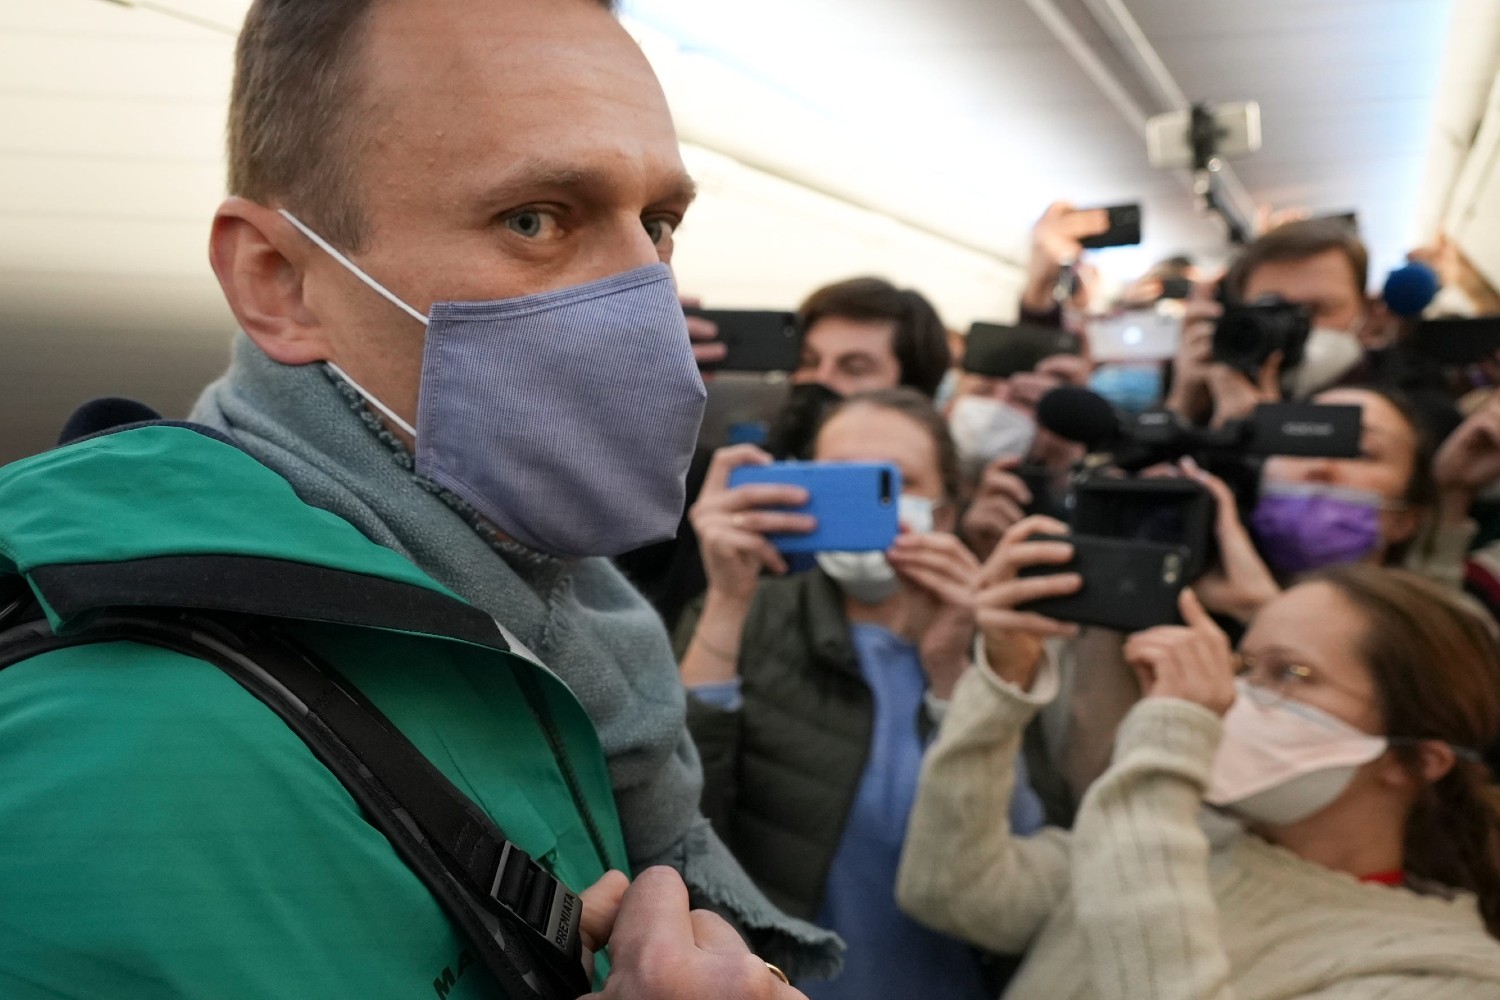 Ruski opozicioni lider Aleksej Navaljni okružen novinarima u avionu na aerodromu u Berlinu neposredno pre leta za Moskvu, 17. januar 2021. (Foto: AP Photo/Mstyslav Chernov)